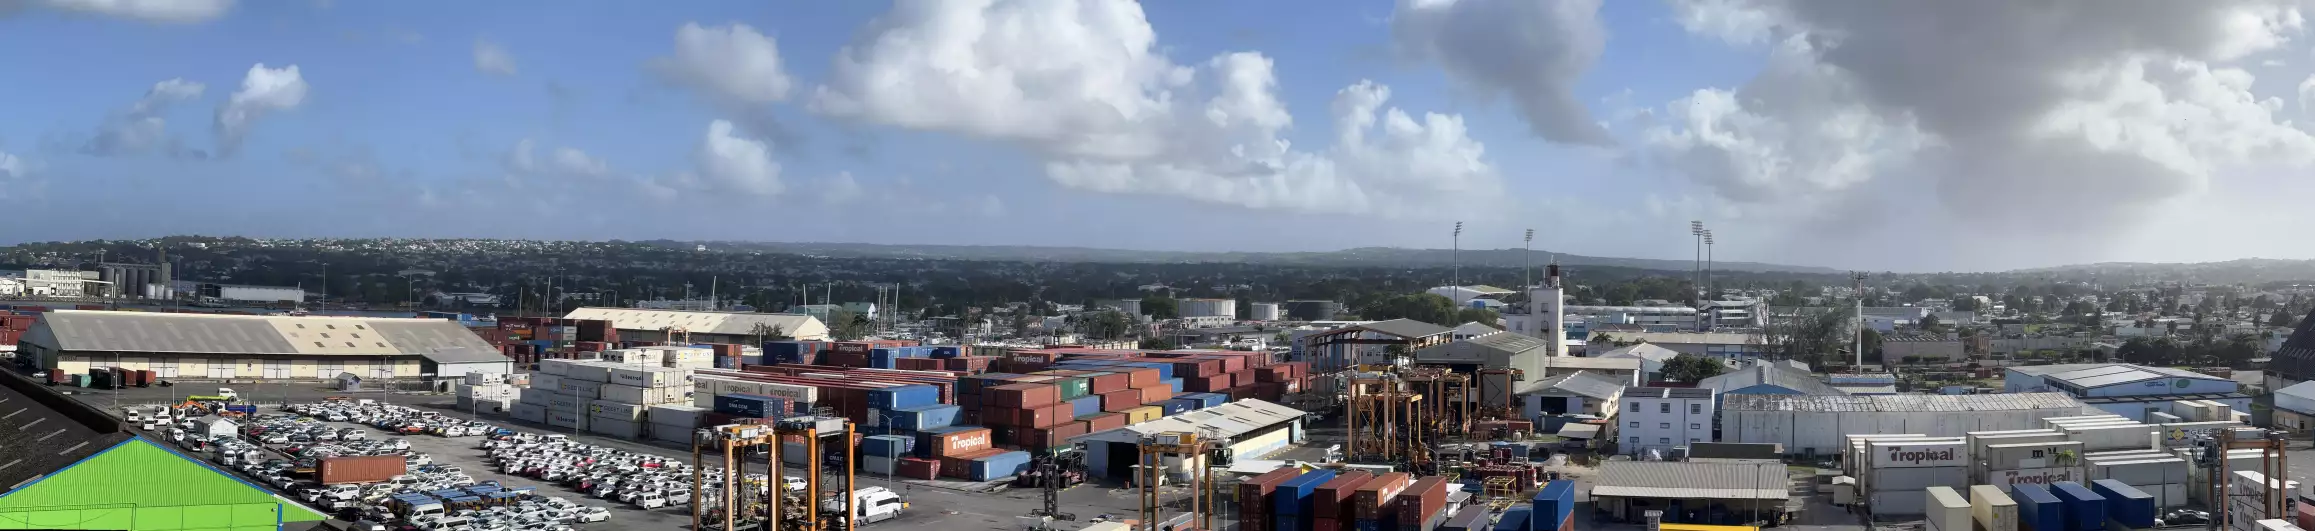 Bridgestown is the capital city of Barbados